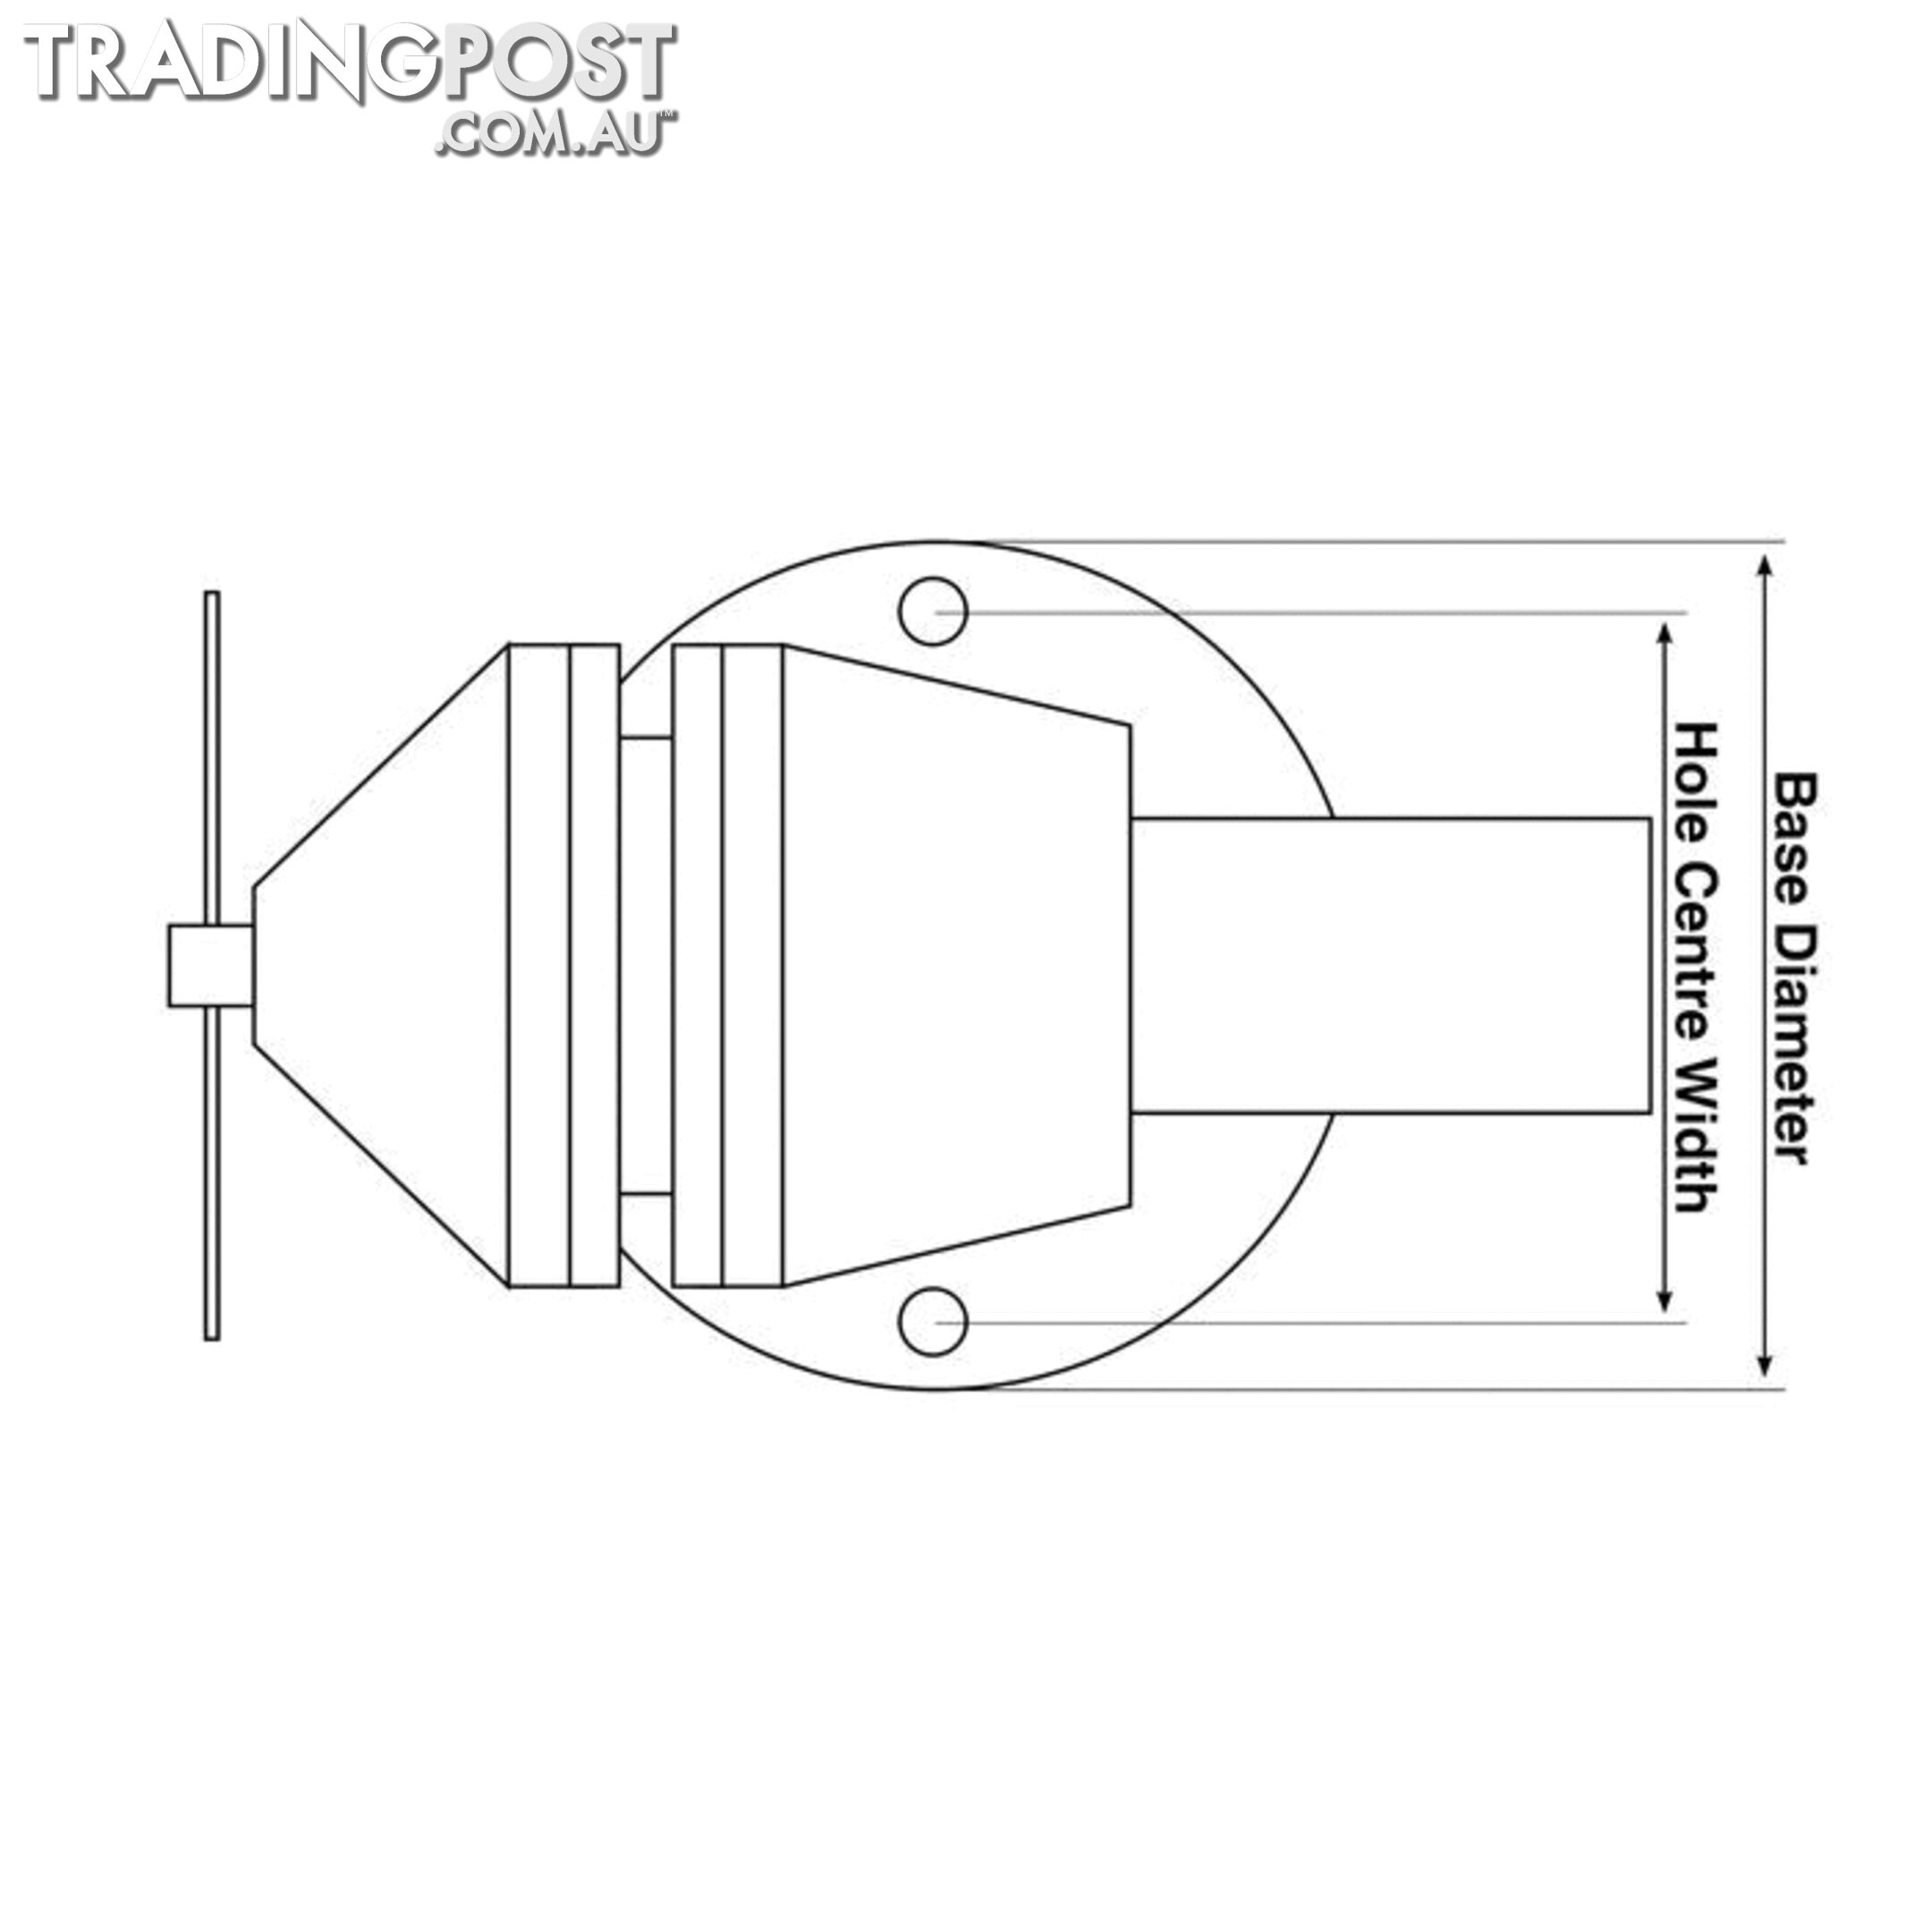 150mm Professional Mechanics Bench Vice ITM TM100-150